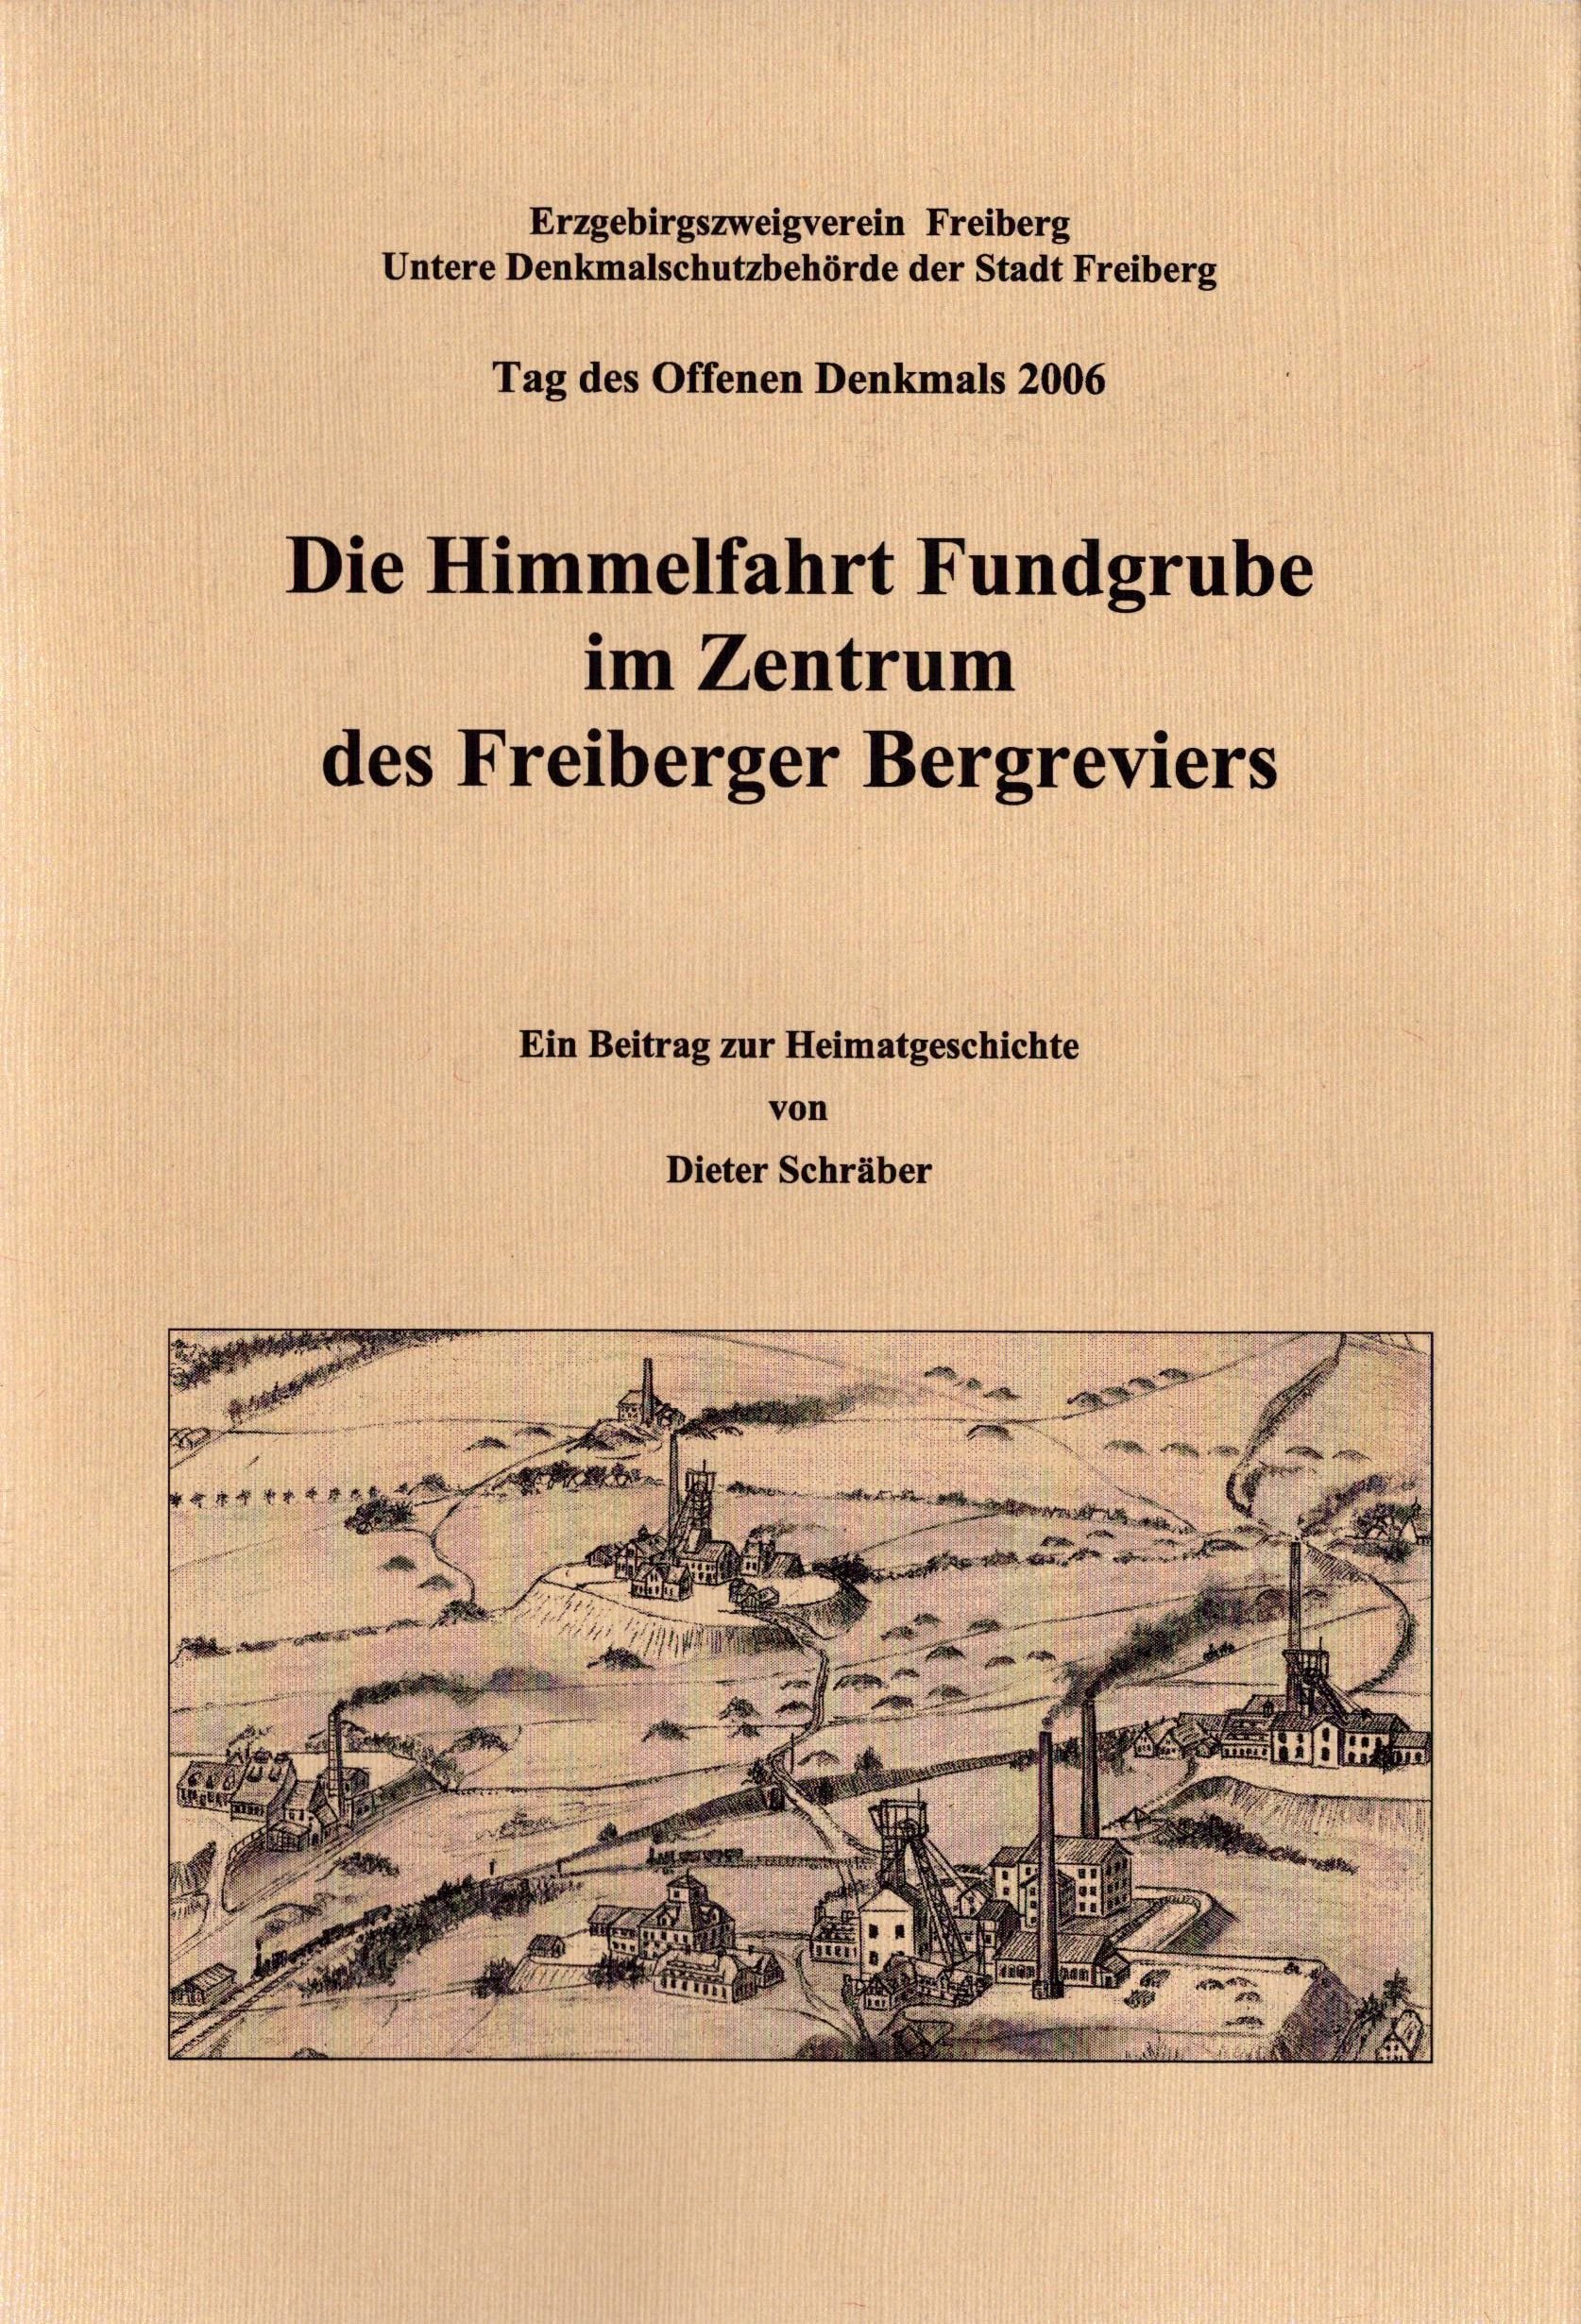 Die Himmelfahrt Fundgrube im Zentrum des Freiberger Bergreviers (Archiv SAXONIA-FREIBERG-STIFTUNG CC BY-NC-SA)